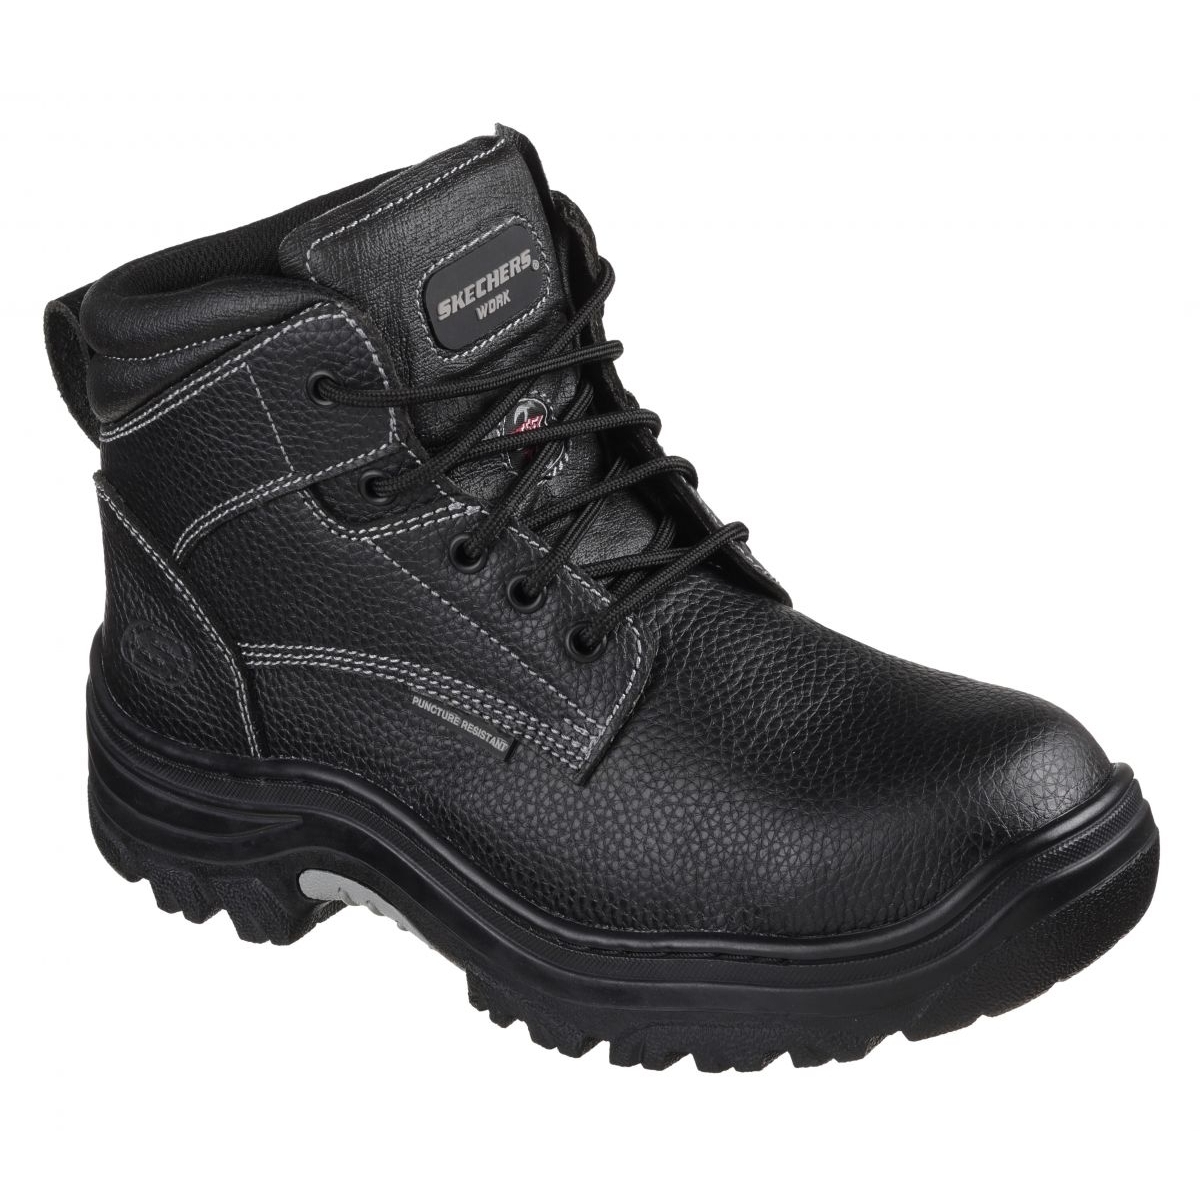 Skechers Men's Burgin-Tarlac Industrial Boot Varies BLACK - BLACK, 10.5